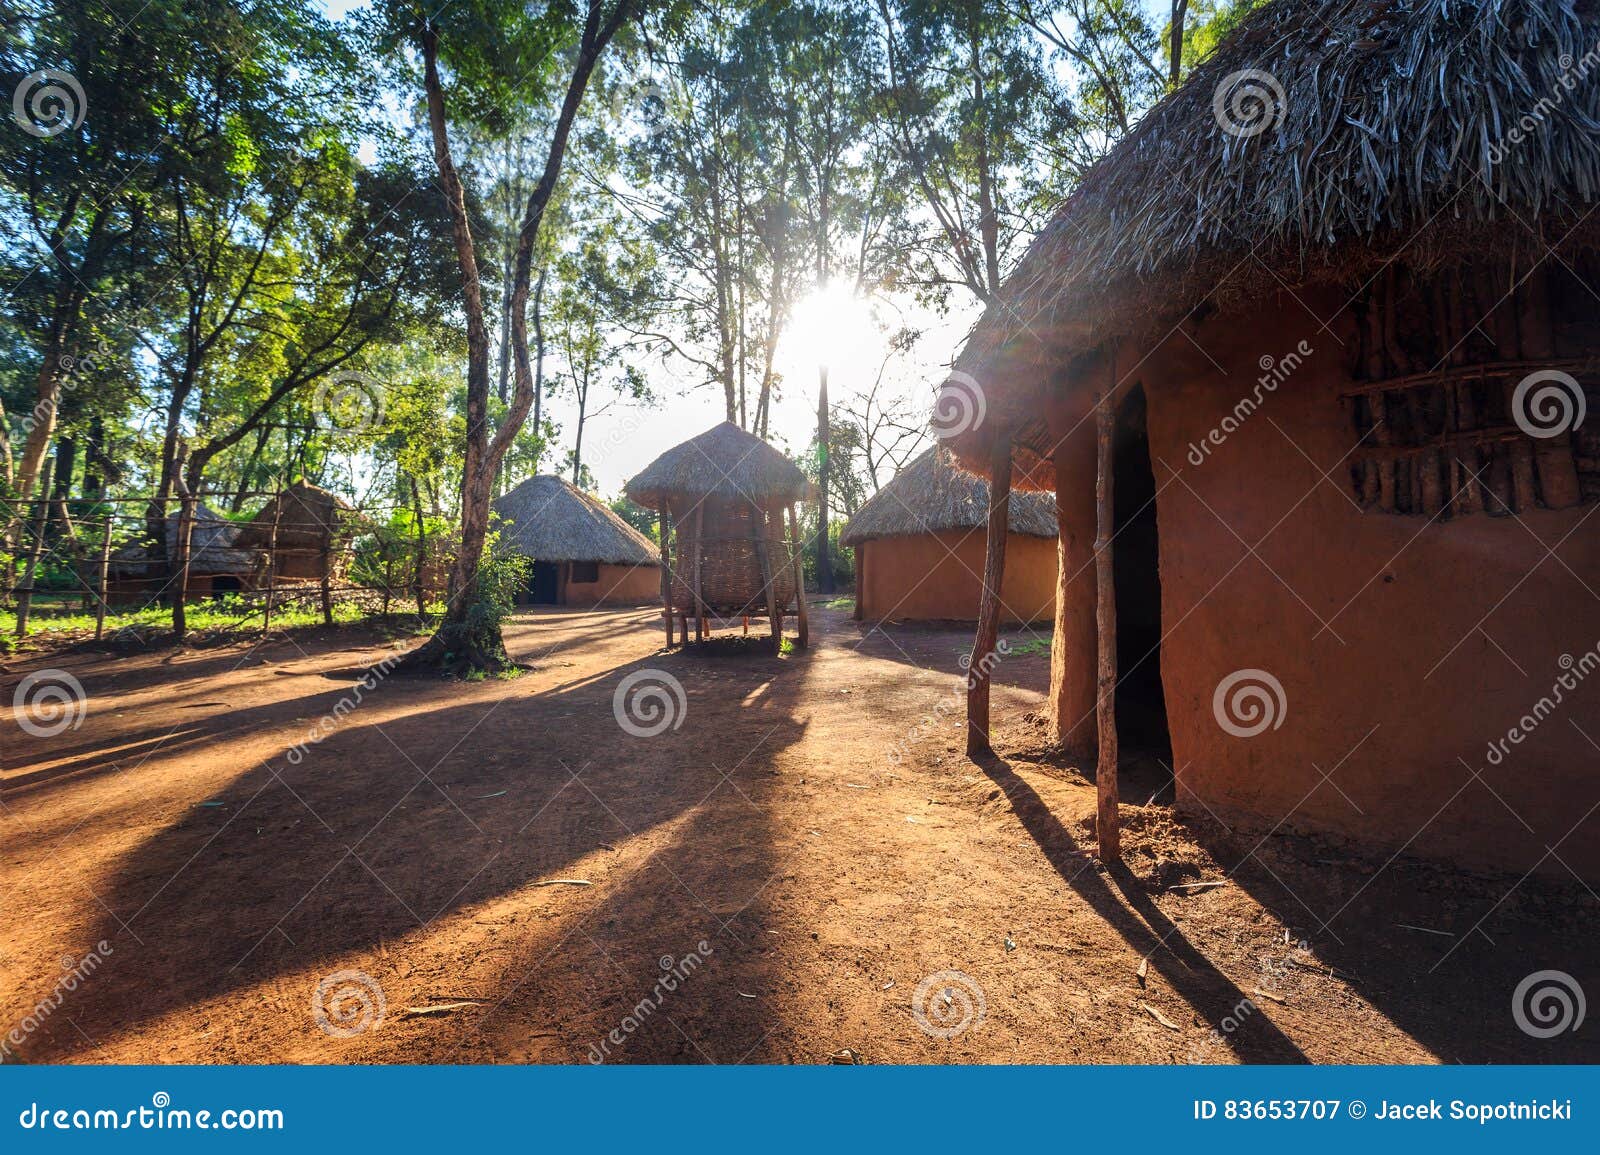 traditional, tribal hut of kenyan people